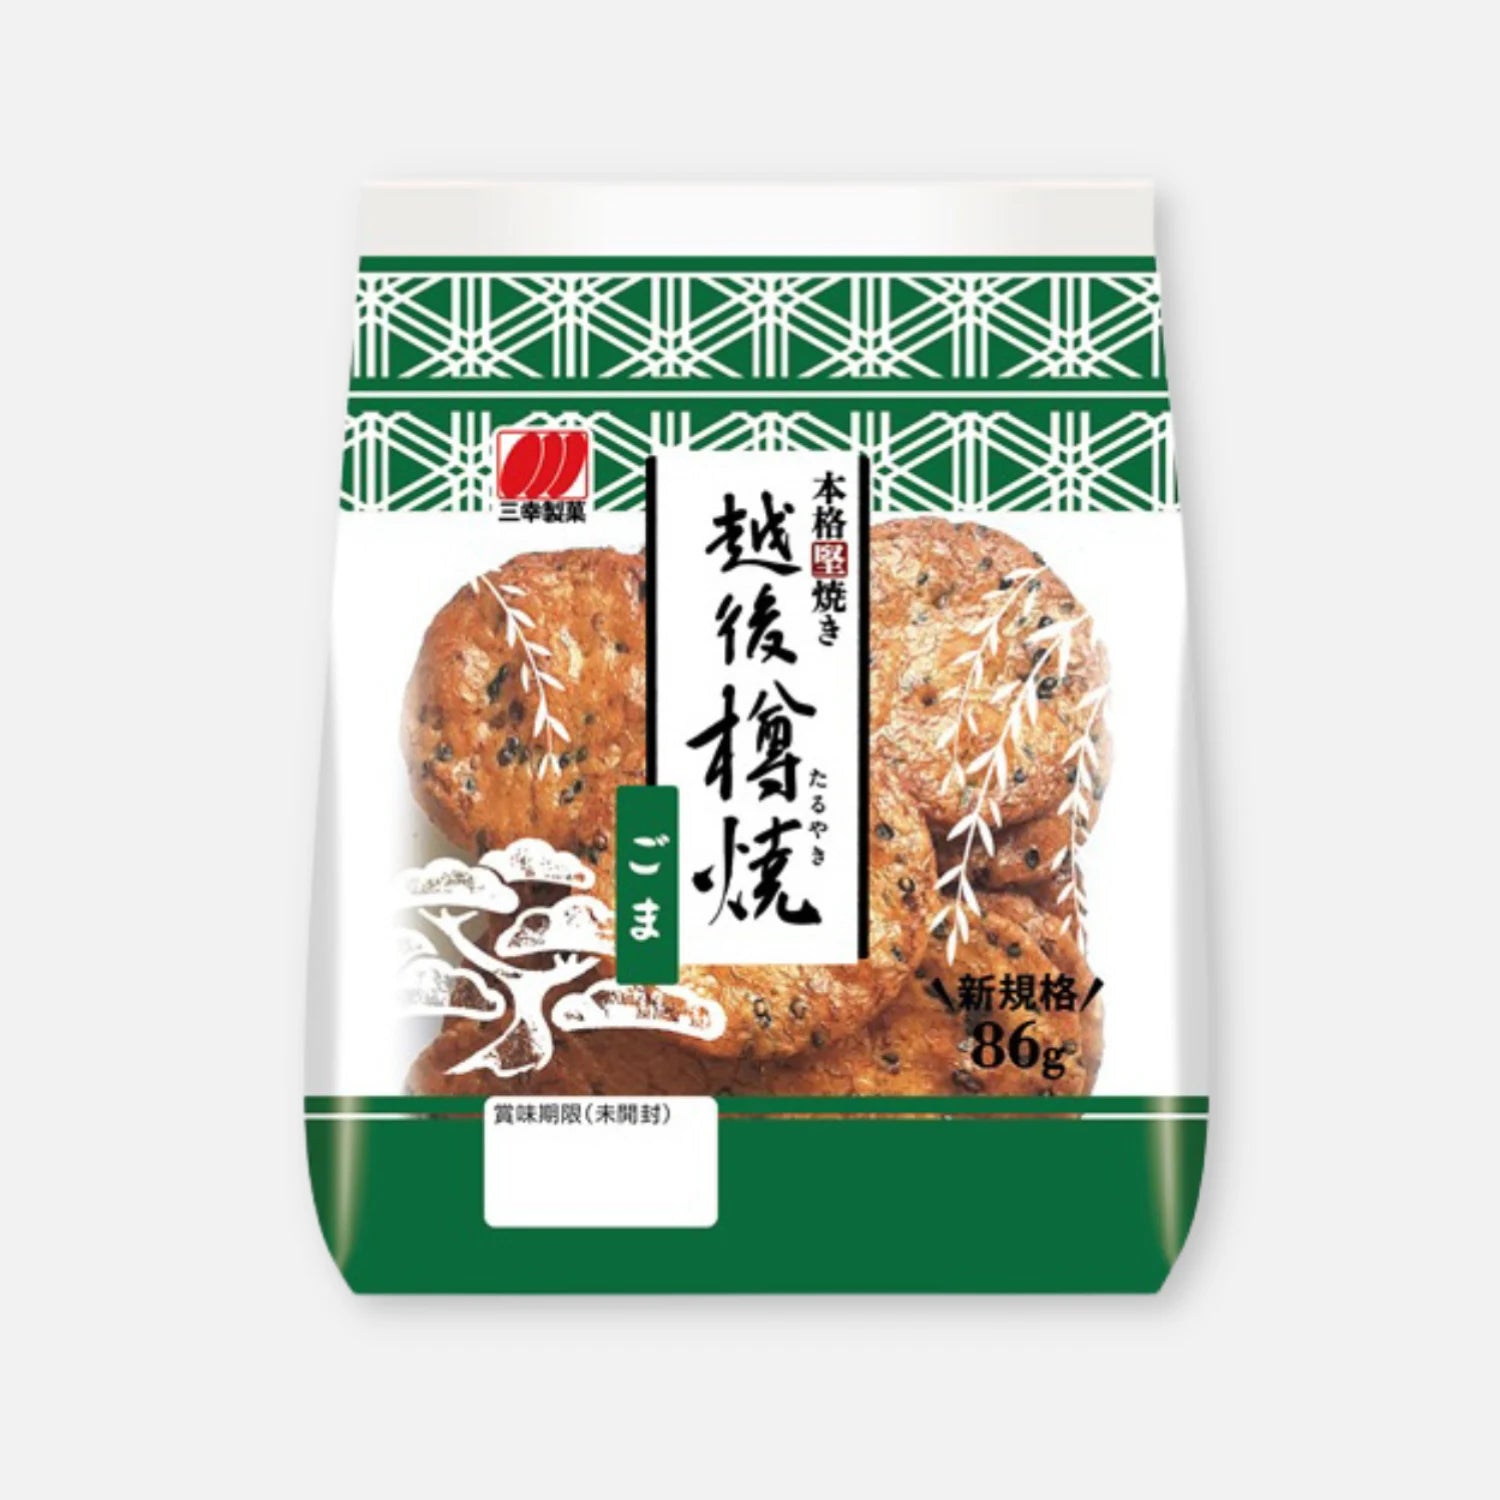 Sanko Seika Grilled Rice Crackers (Black Sesame) 86g - Buy Me Japan